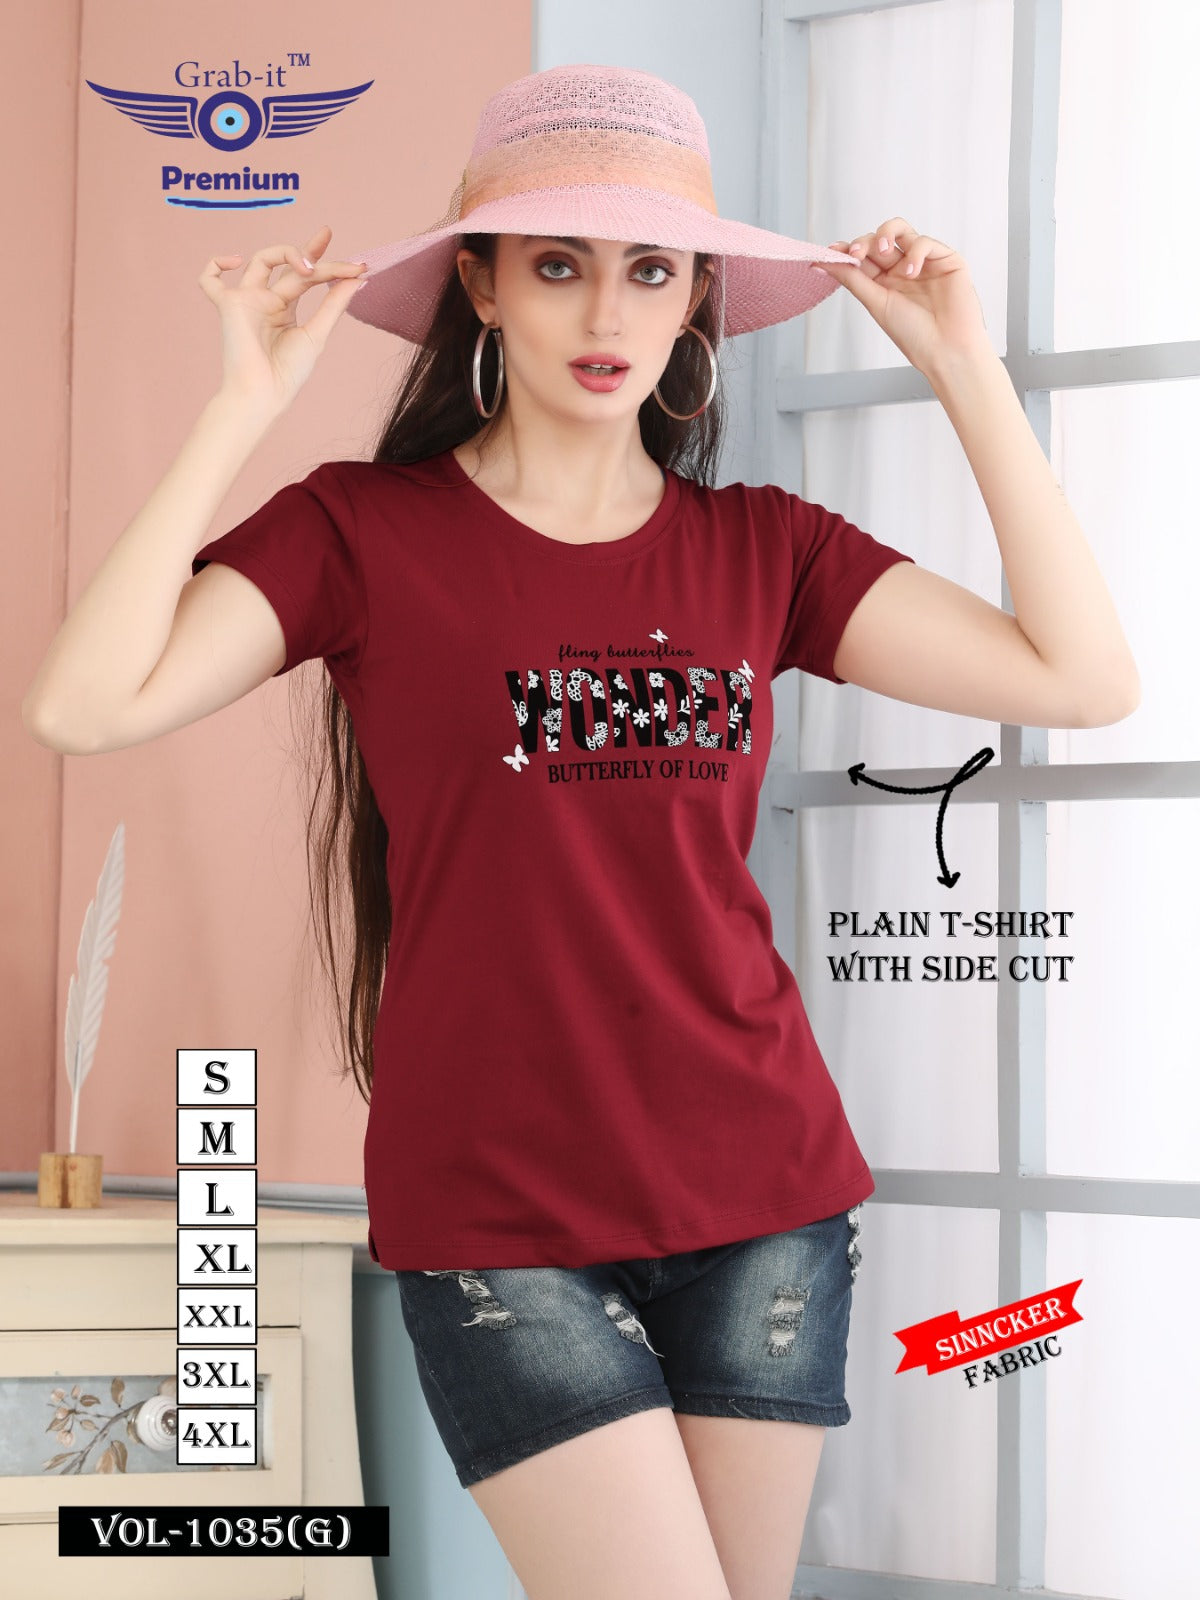 1035 G Grab It Sincker Women Tshirt Exporter India